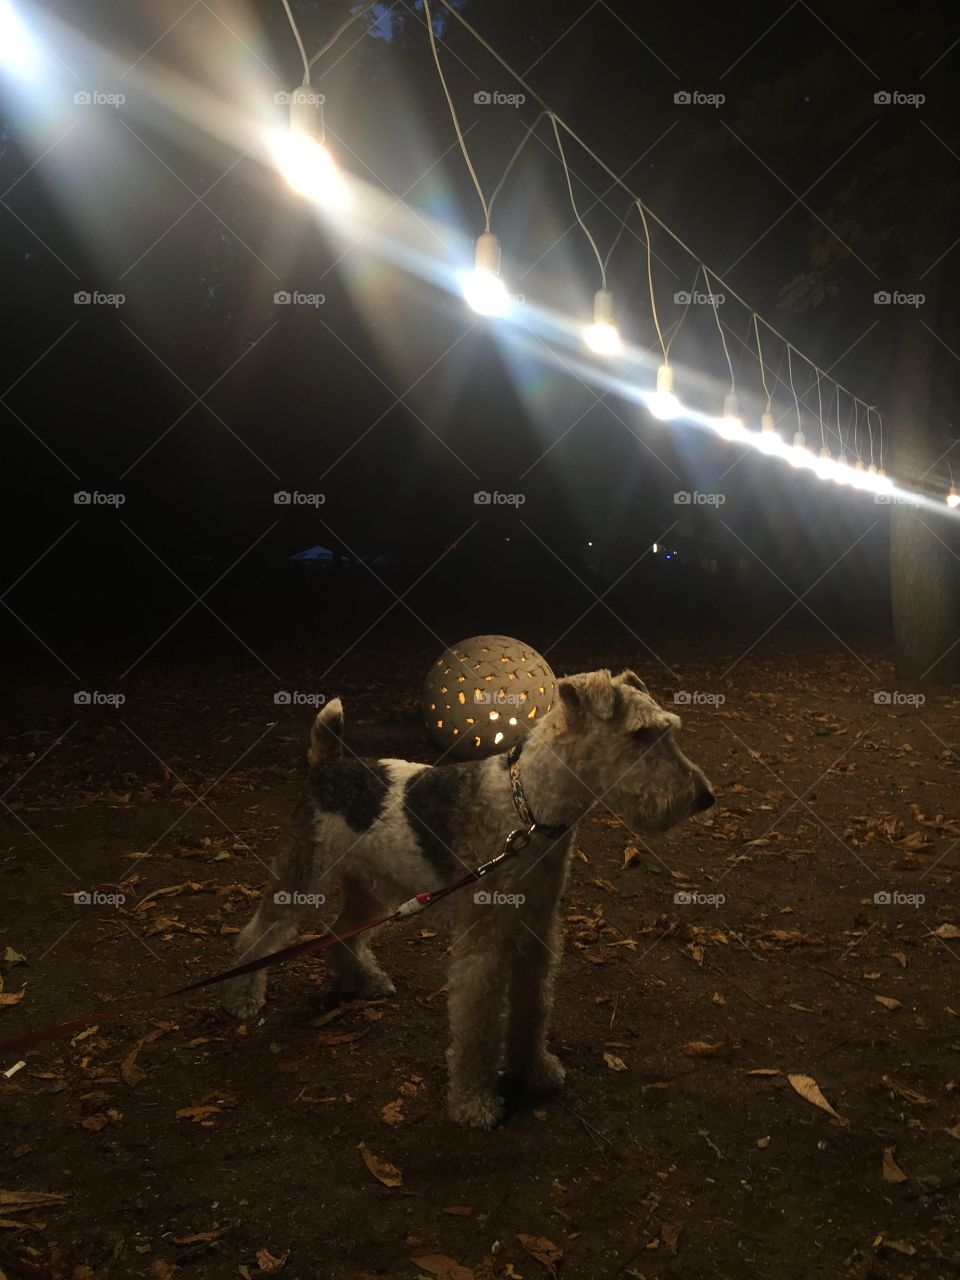 A dog standing in the park under lanterns